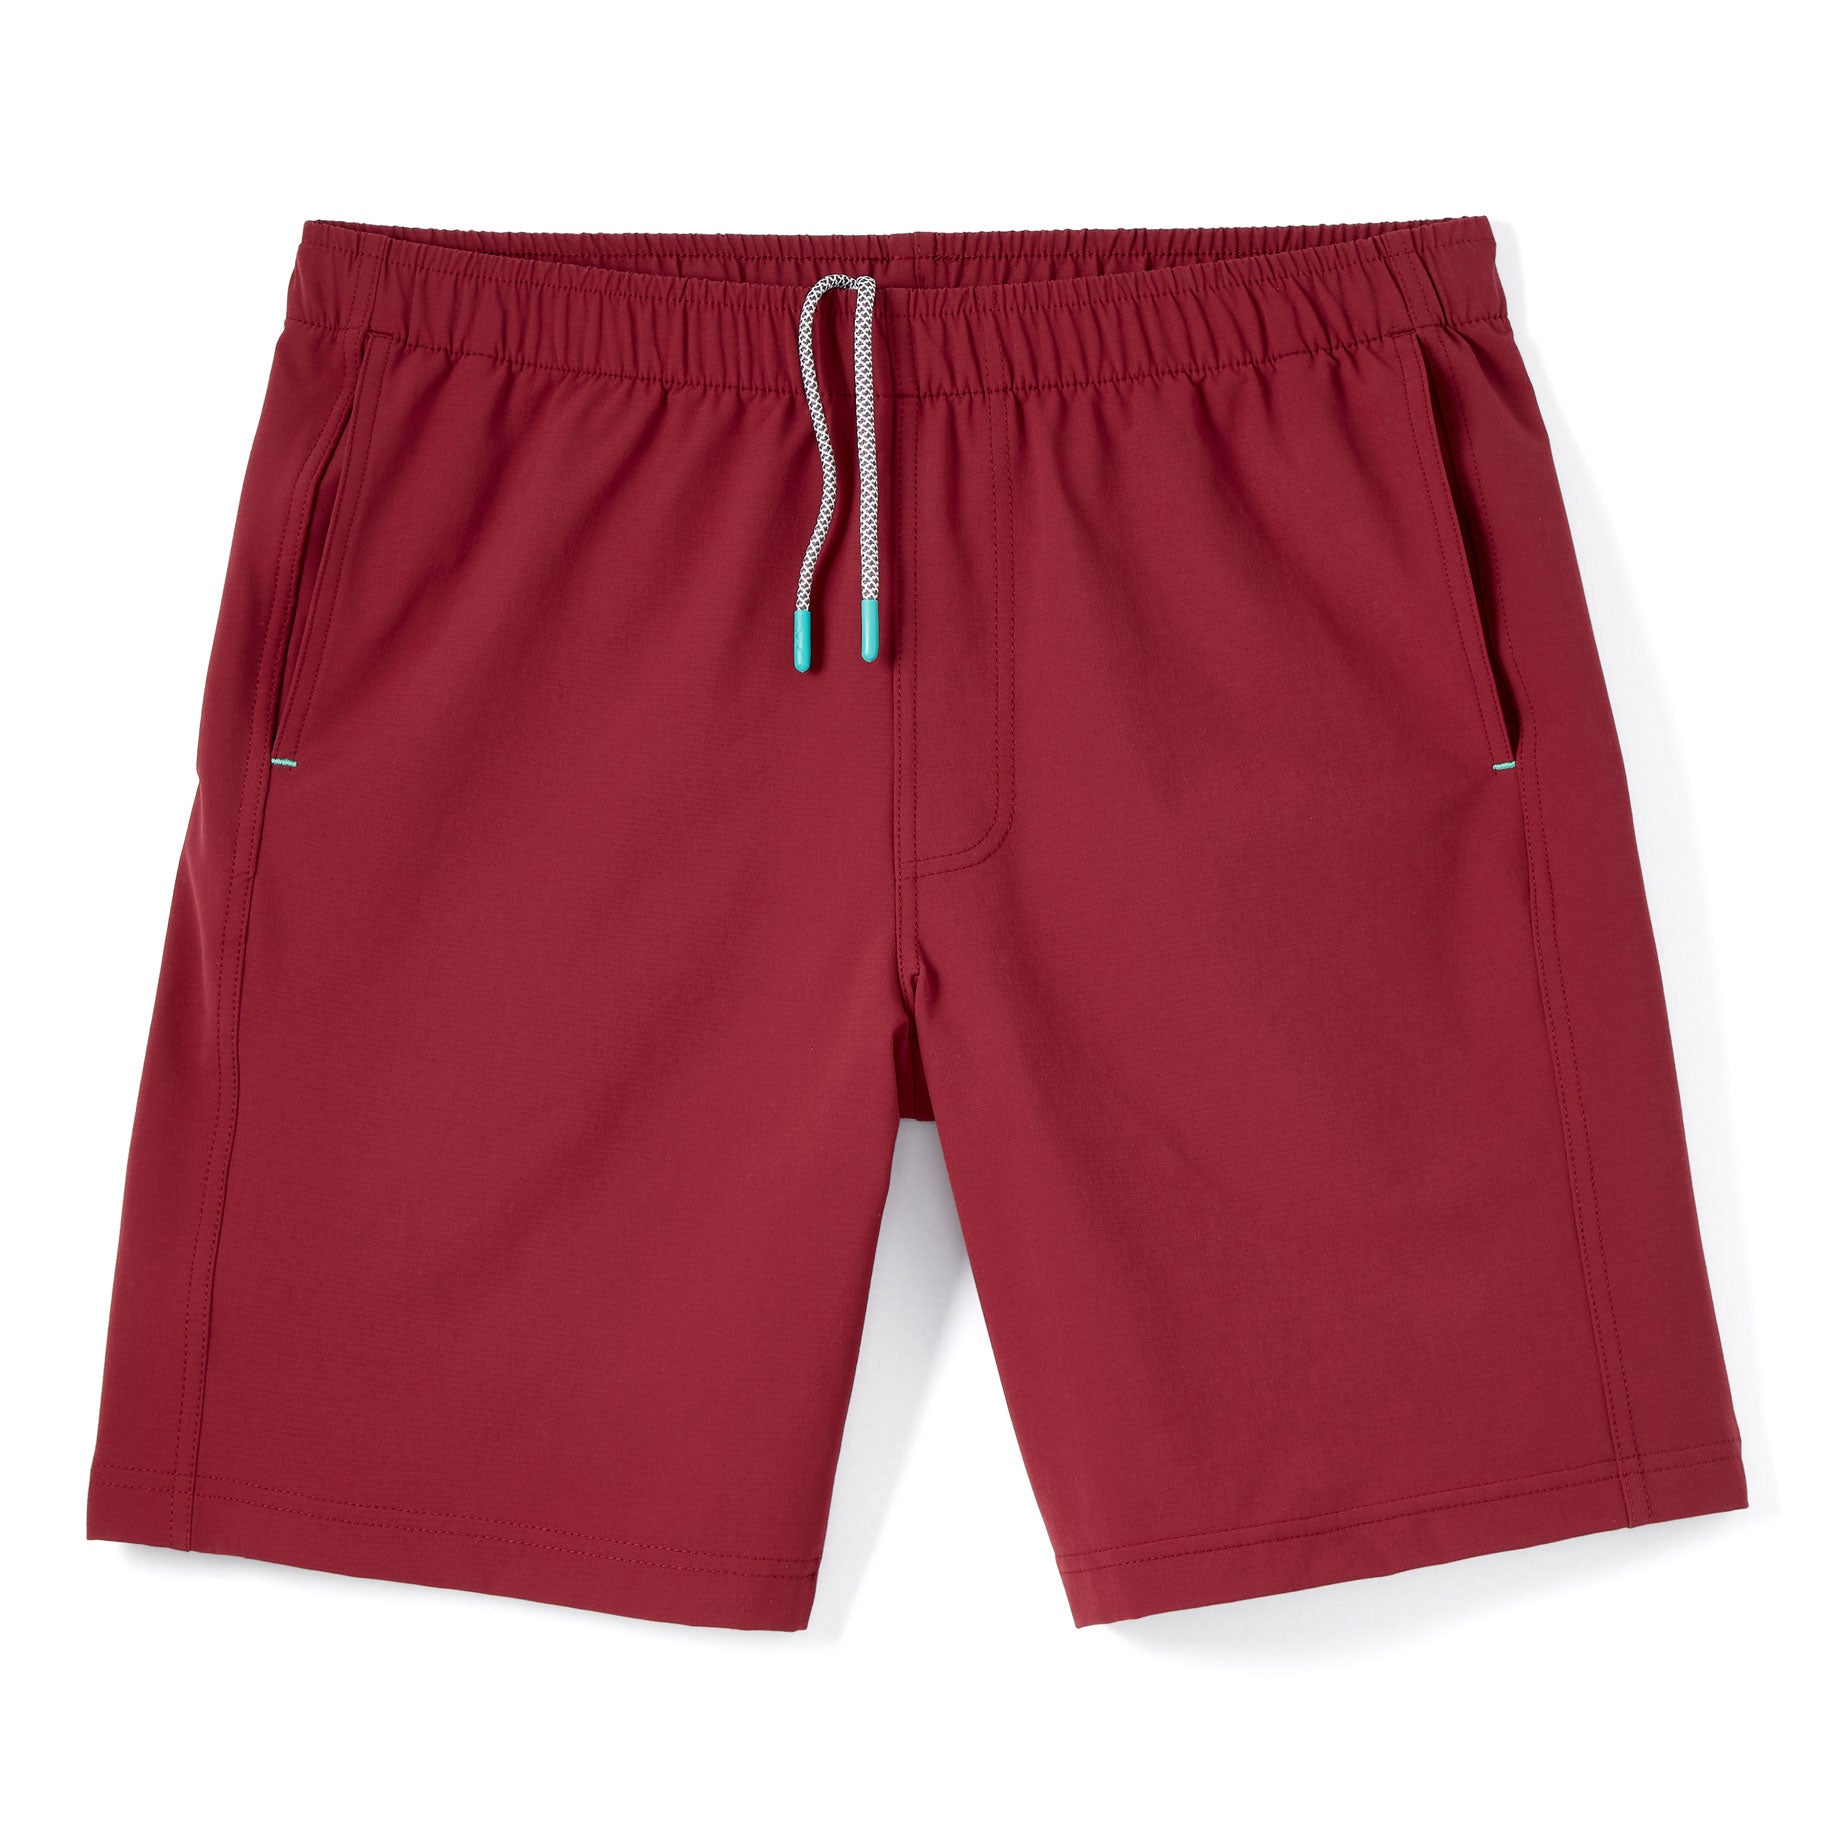 Myles Apparel Men's Everyday Short in Oxblood Red Size: XL / 8